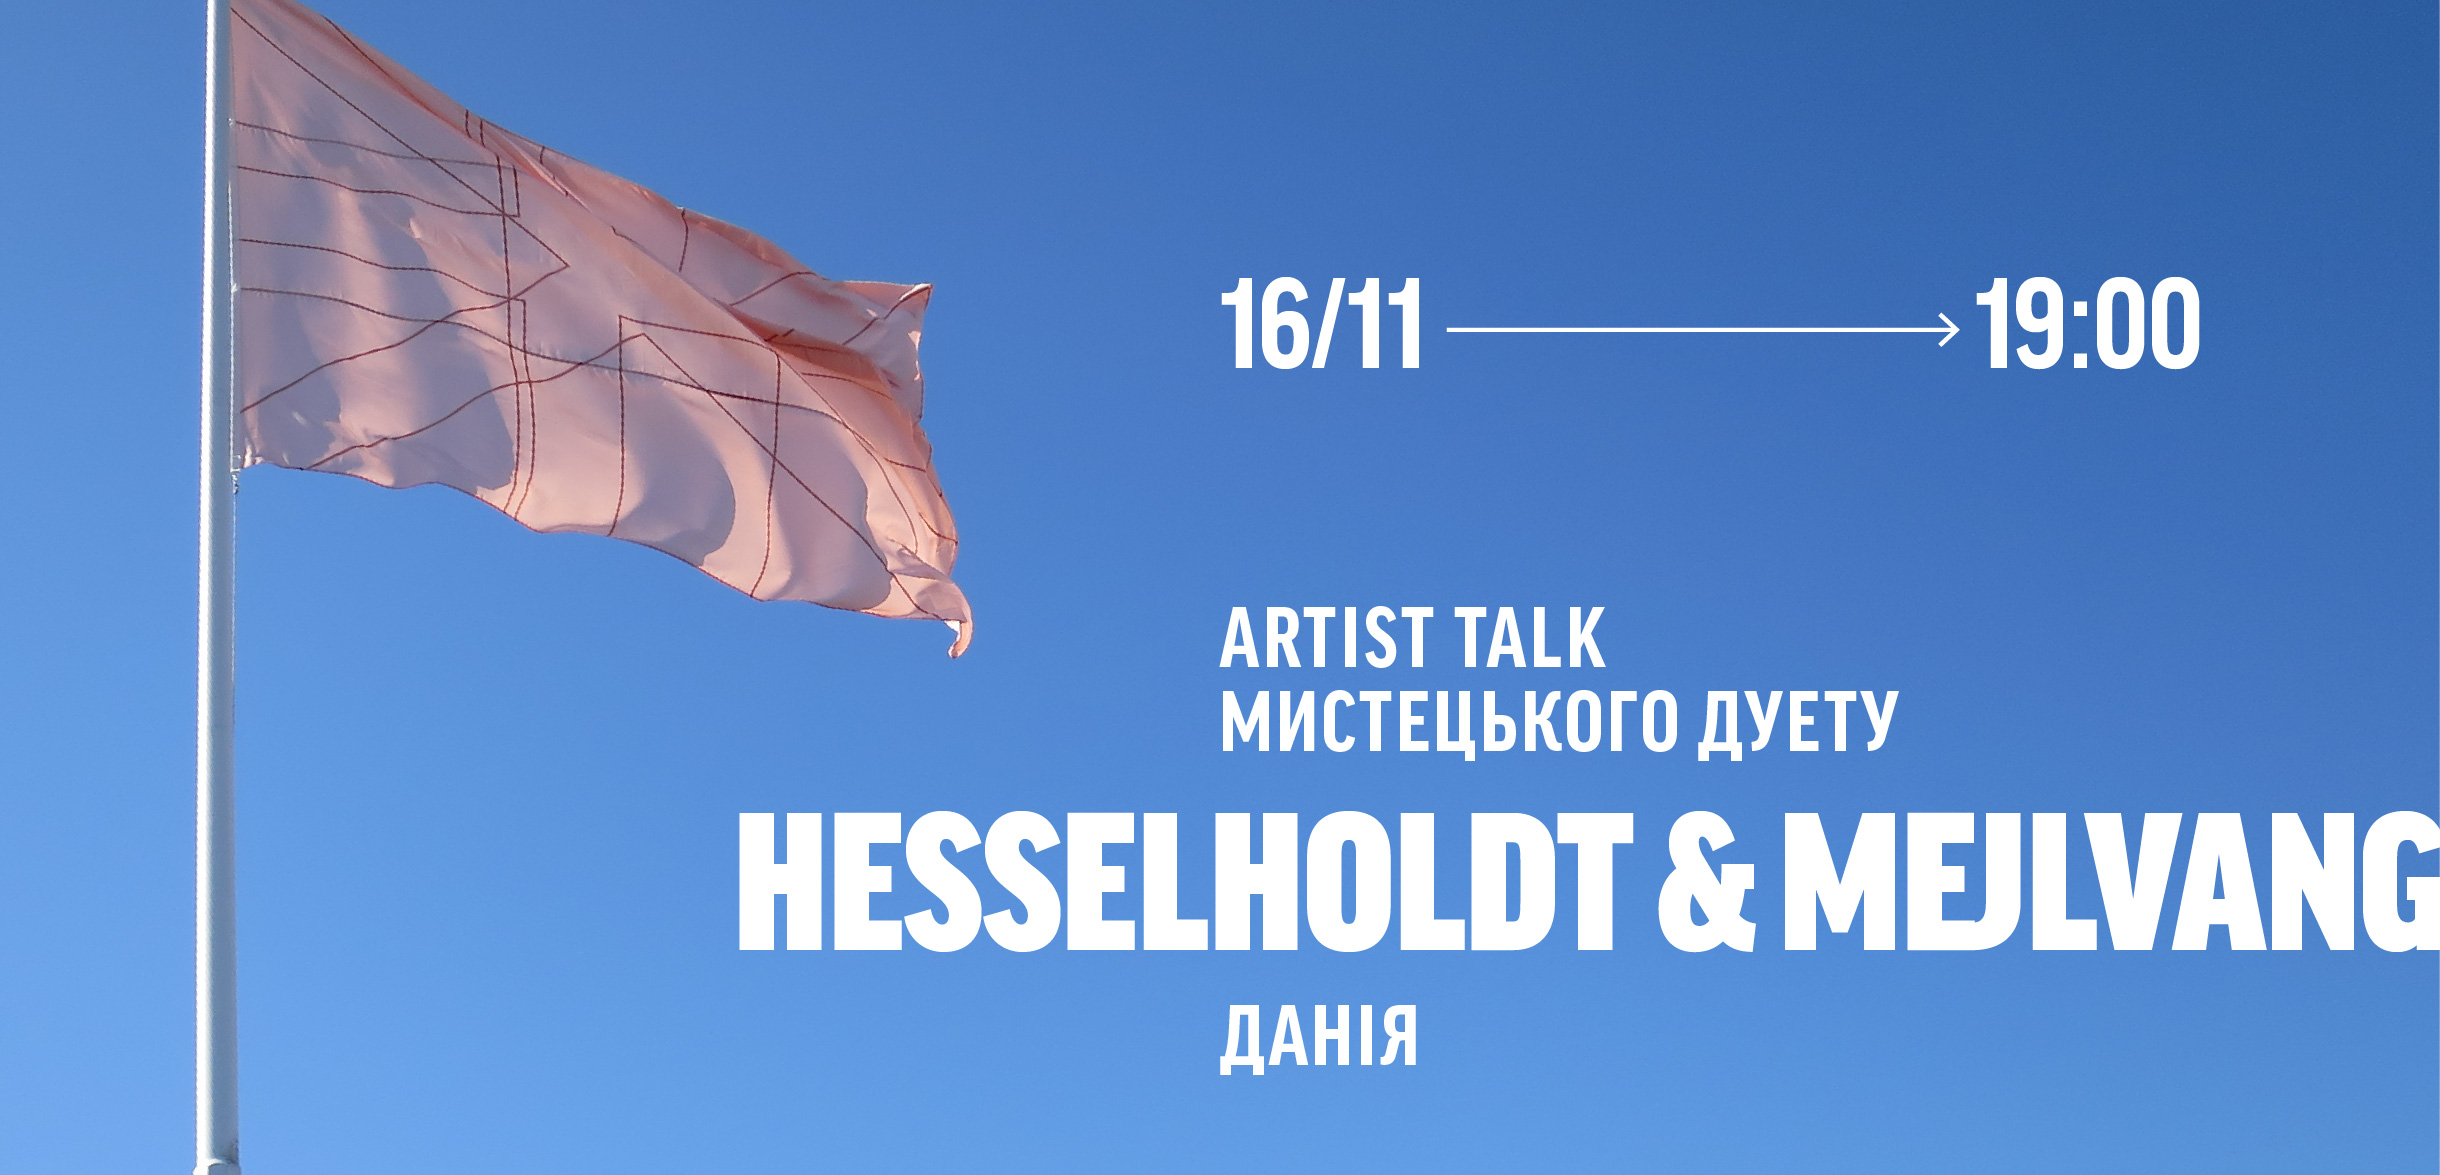 Artist talk by Hesselholdt & Mejlvang